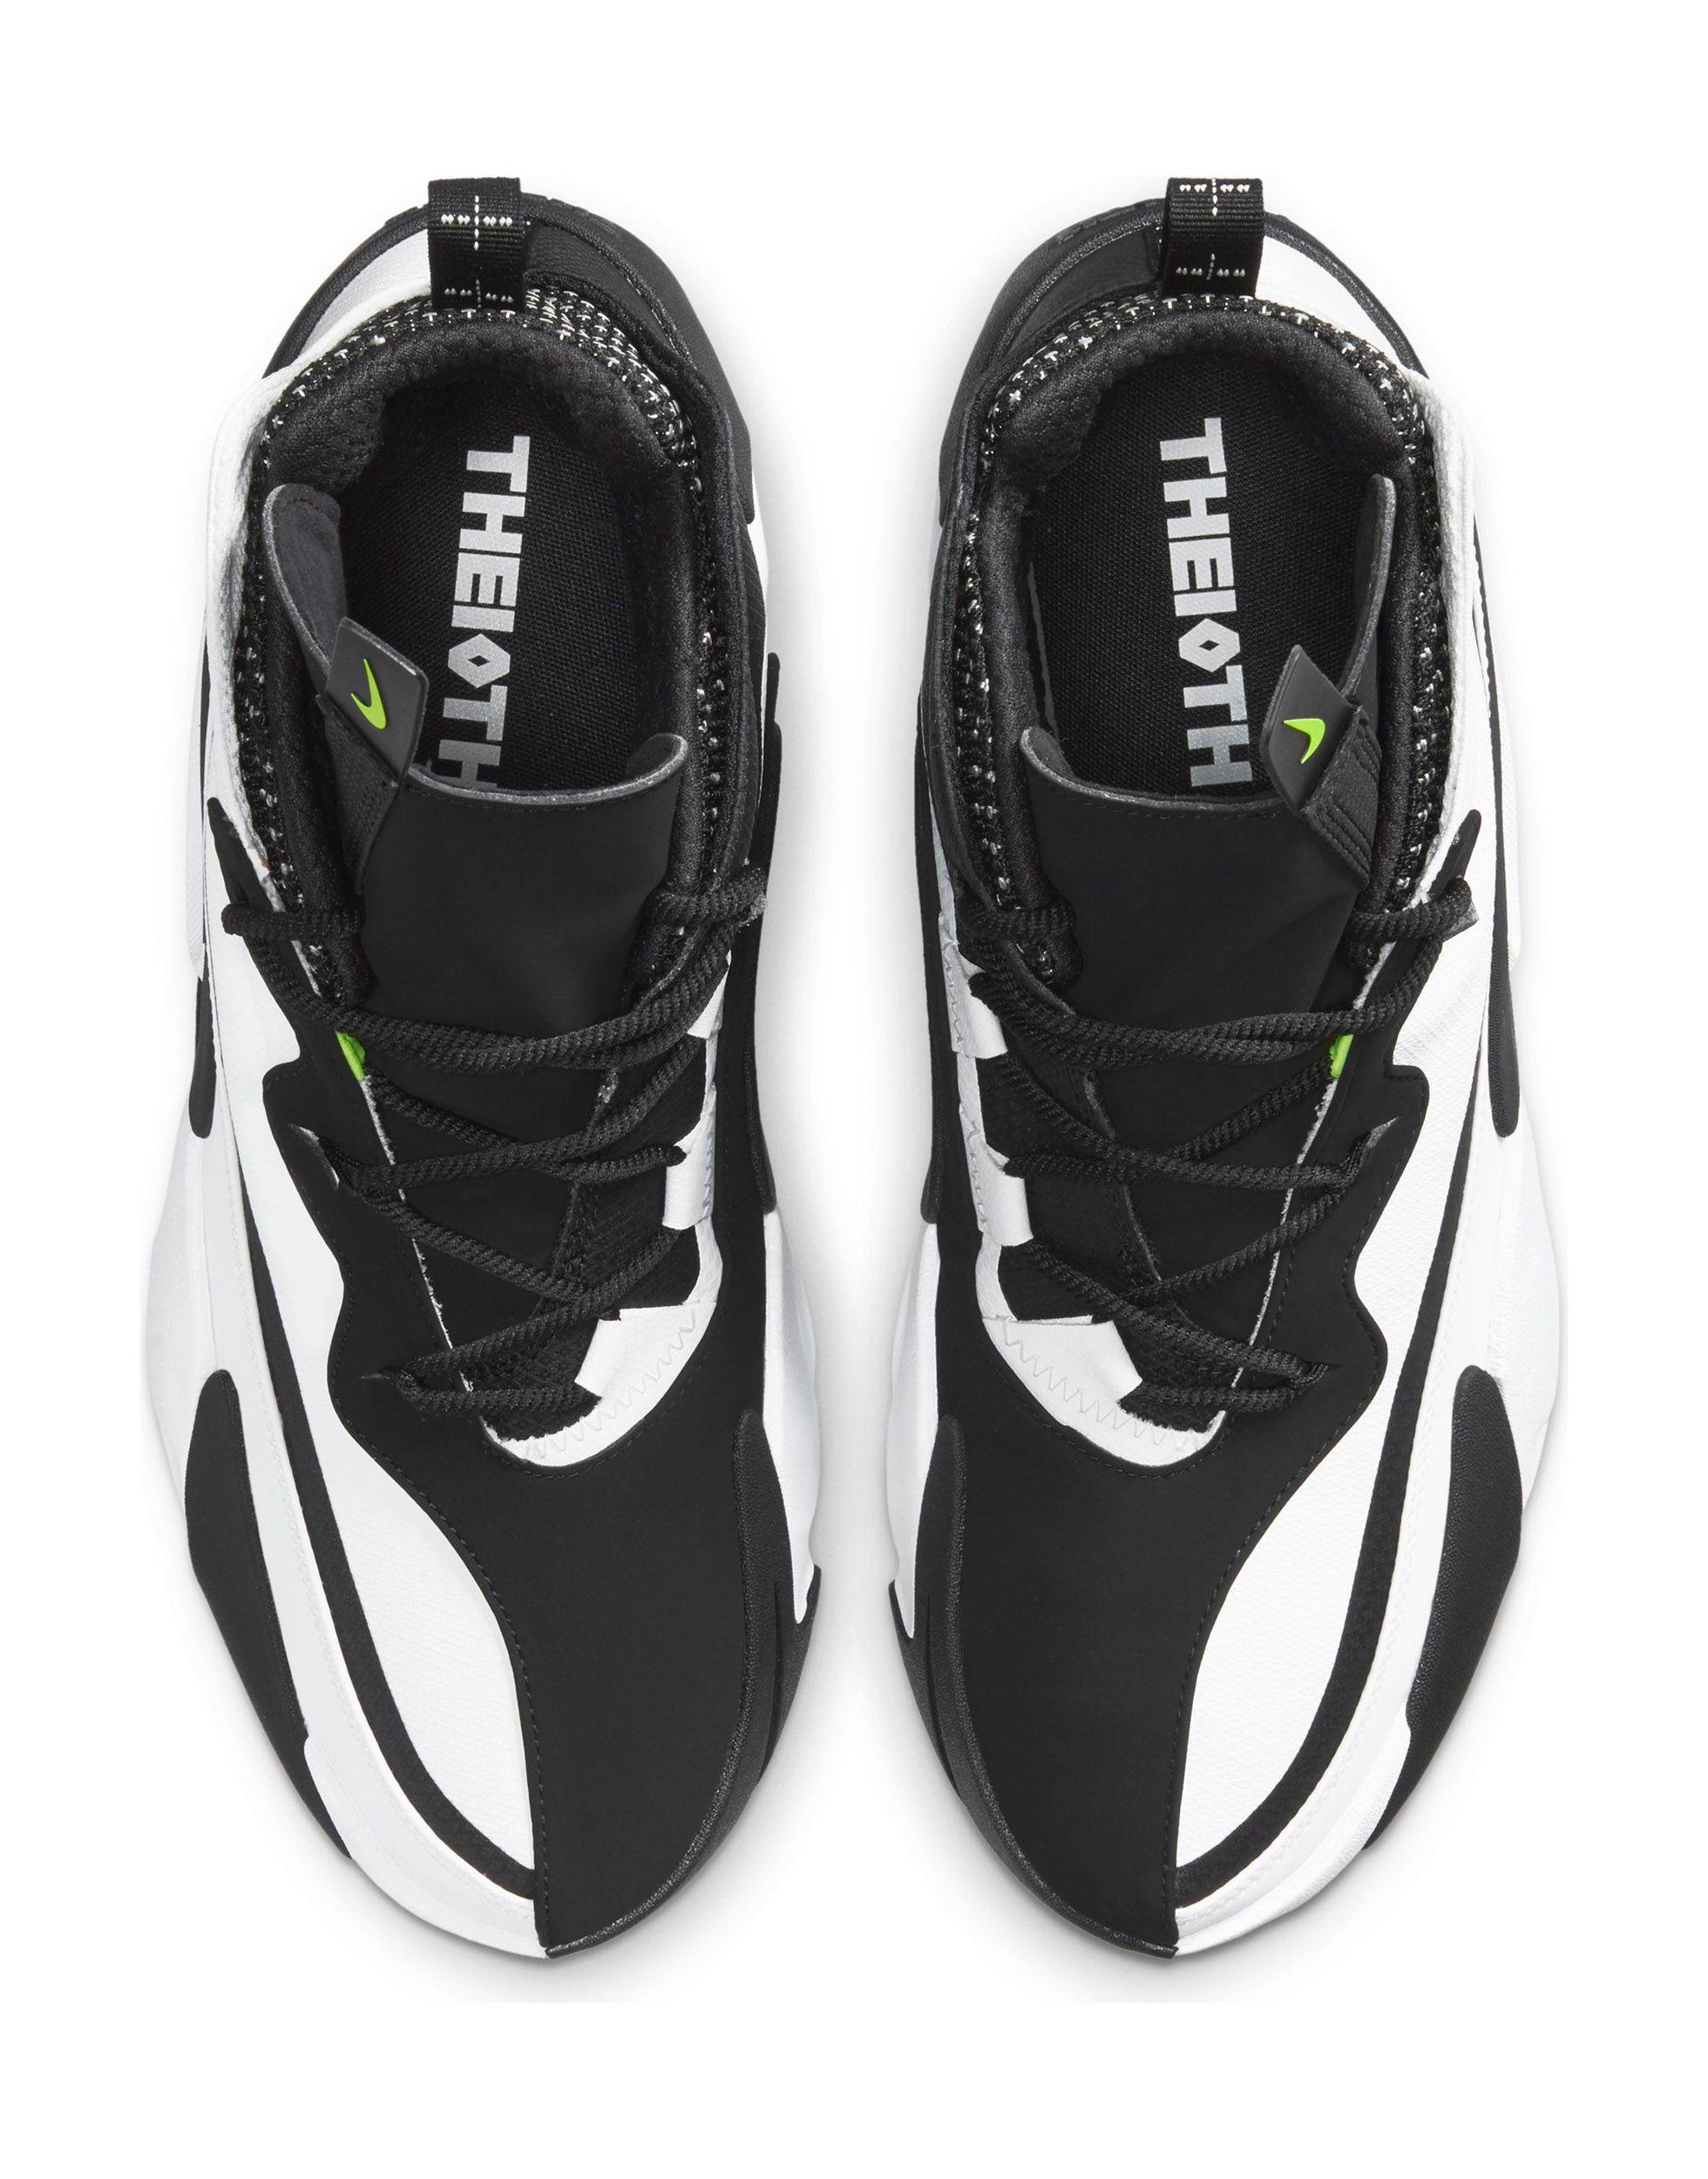 pludselig Accepteret Staple Nike Rubber React Frenzy Sneakers in Black for Men - Lyst